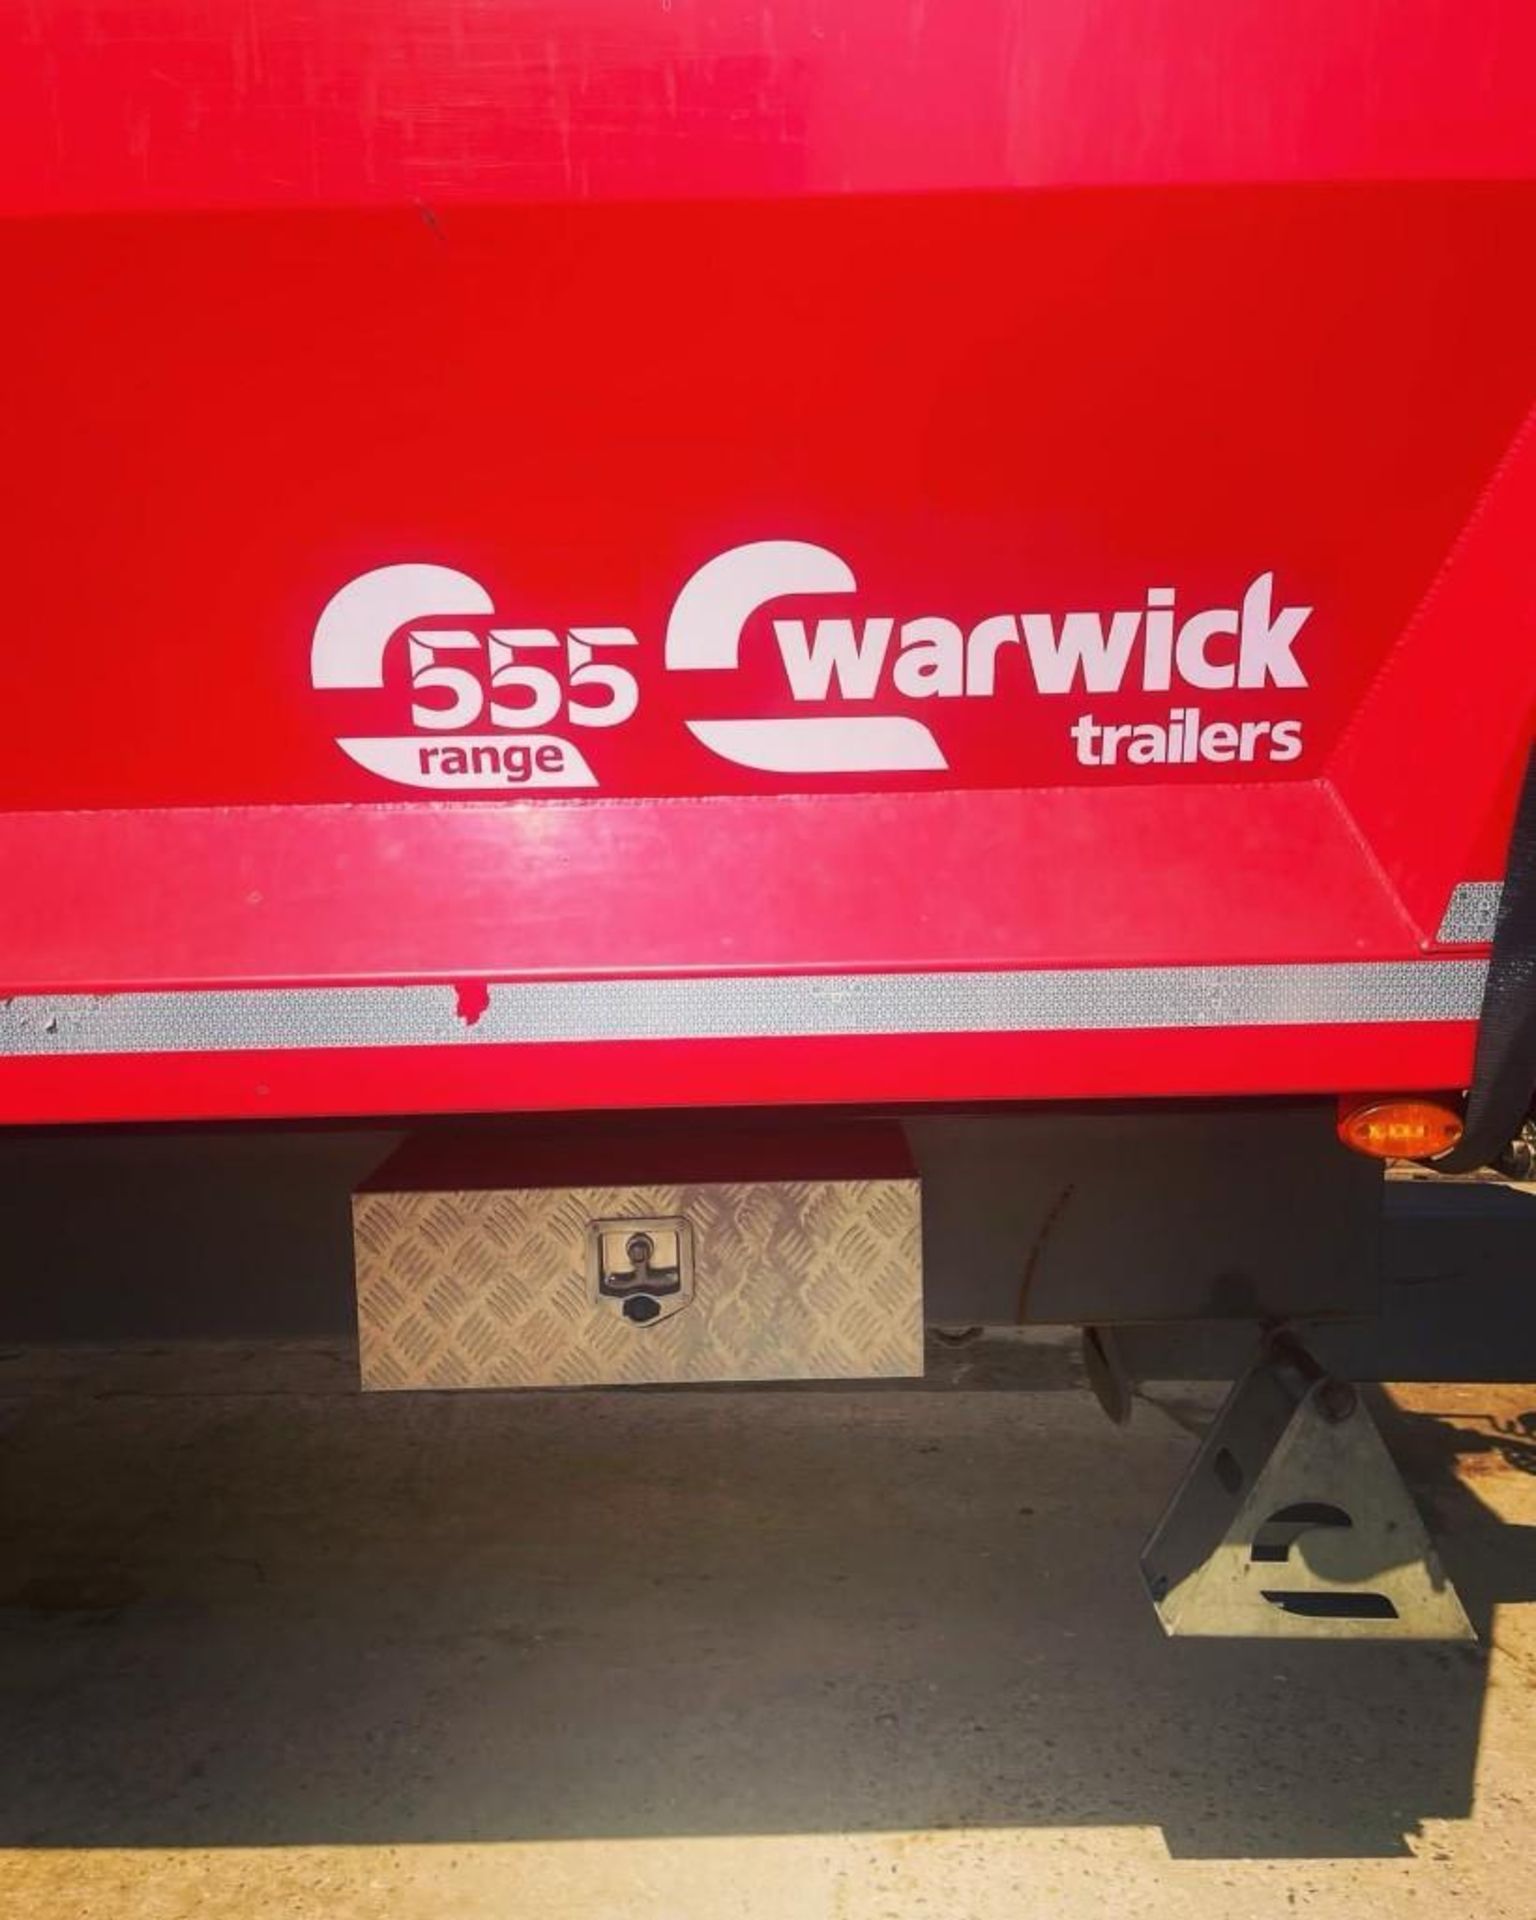 2018 Warwick 16T 555 Trailer - (Norfolk) - Image 4 of 5